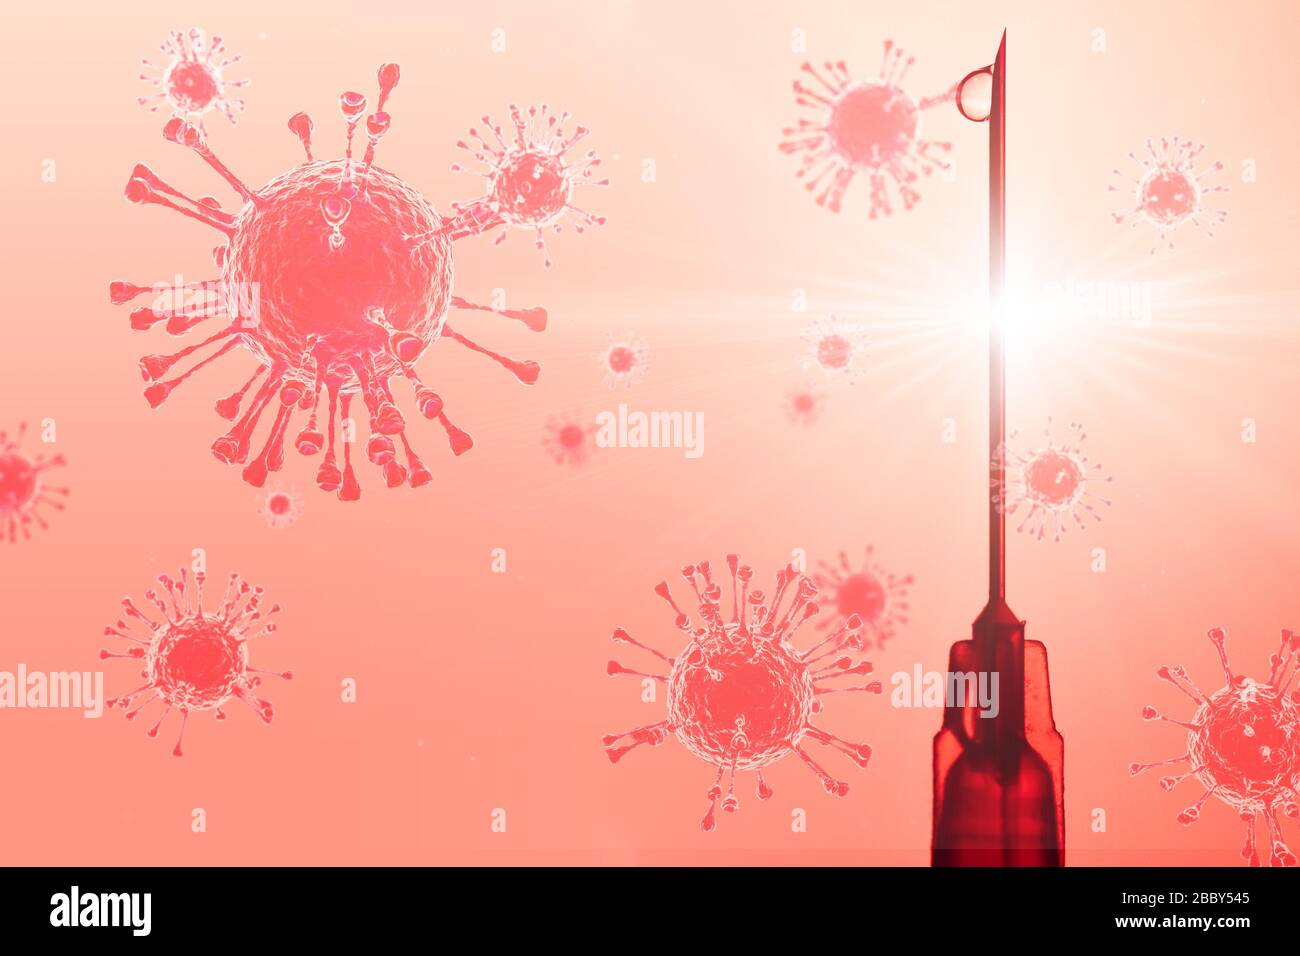 anti virus vaccine or Coronavirus drug concept with copy space. Stock Photo